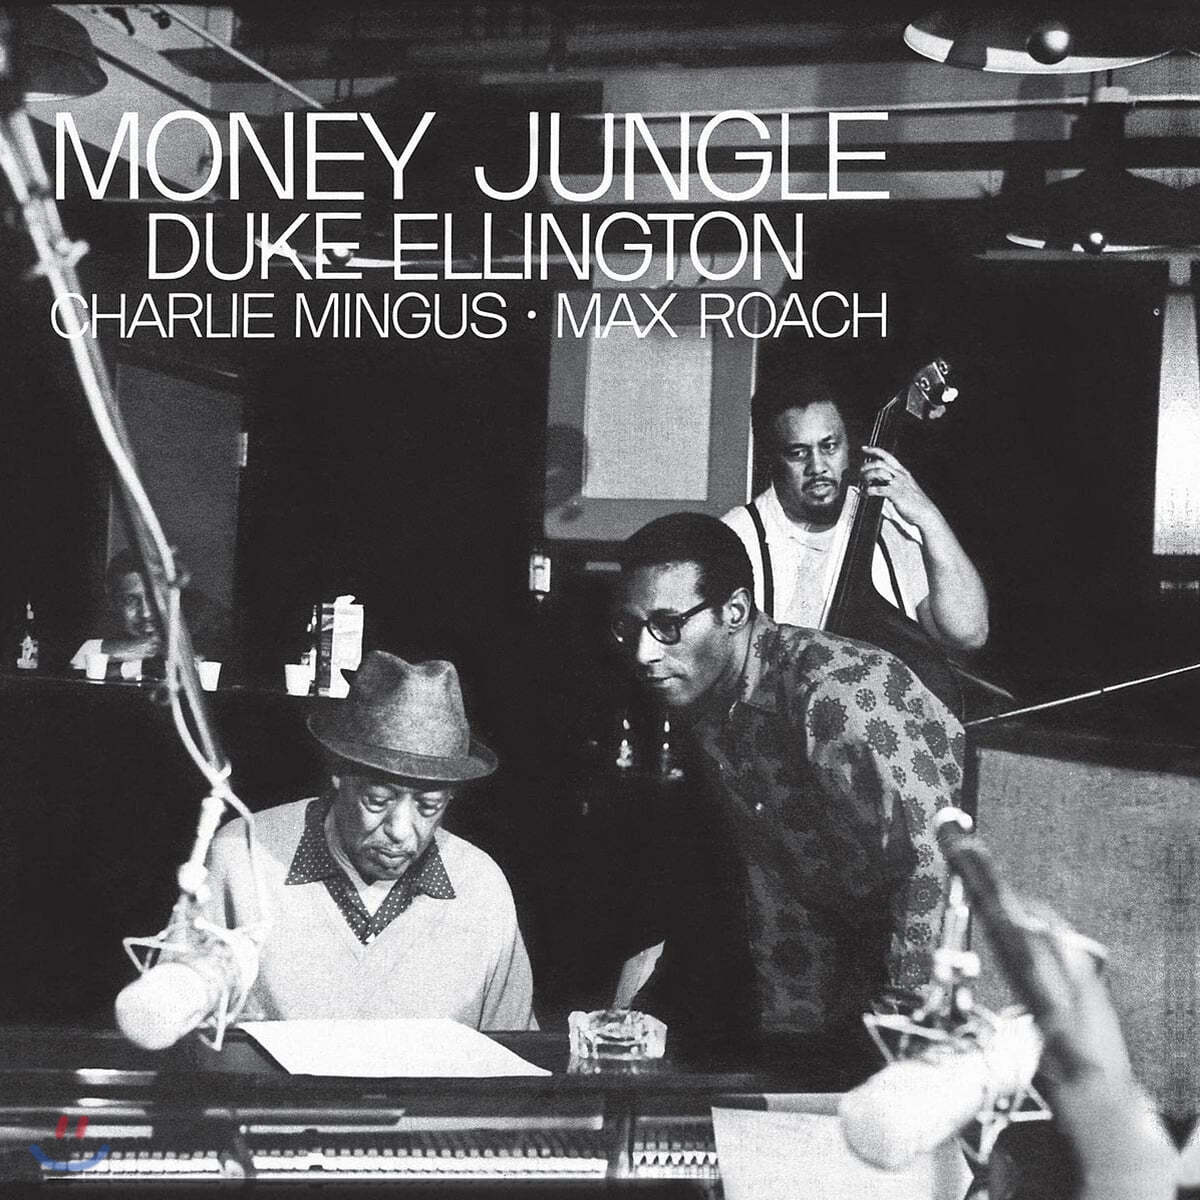 Duke Ellington / Charles Mingus / Max Roach (듀크 엘링턴, 찰스 밍거스, 맥스 로치) - Money Jungle [LP]